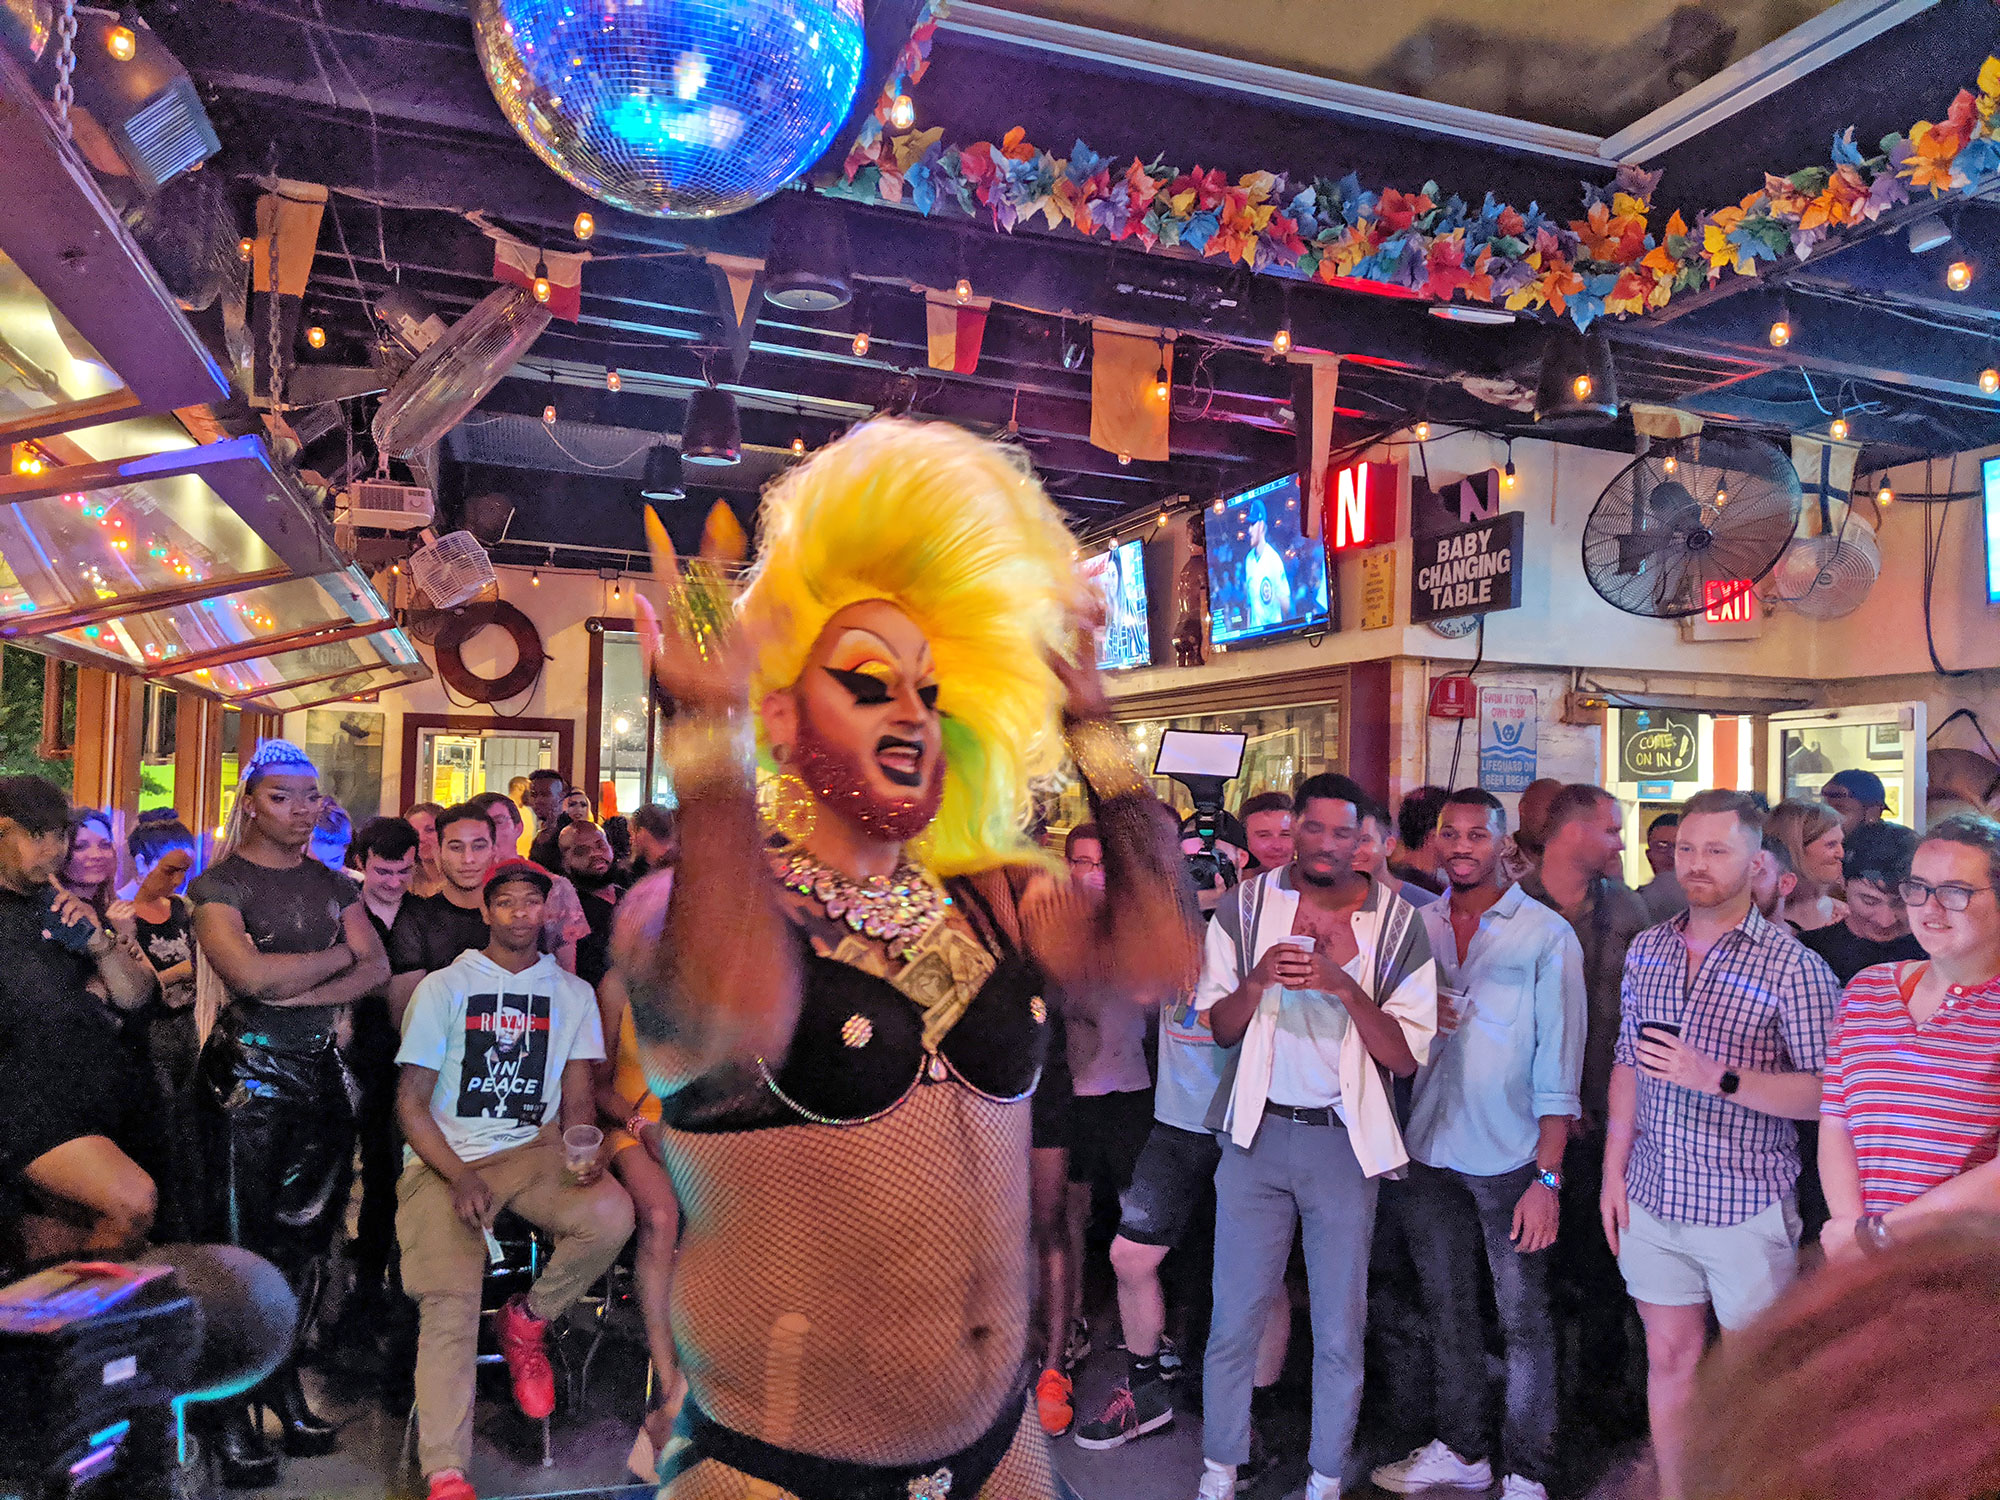 An alternative drag queen at Nellies Sports Bar.